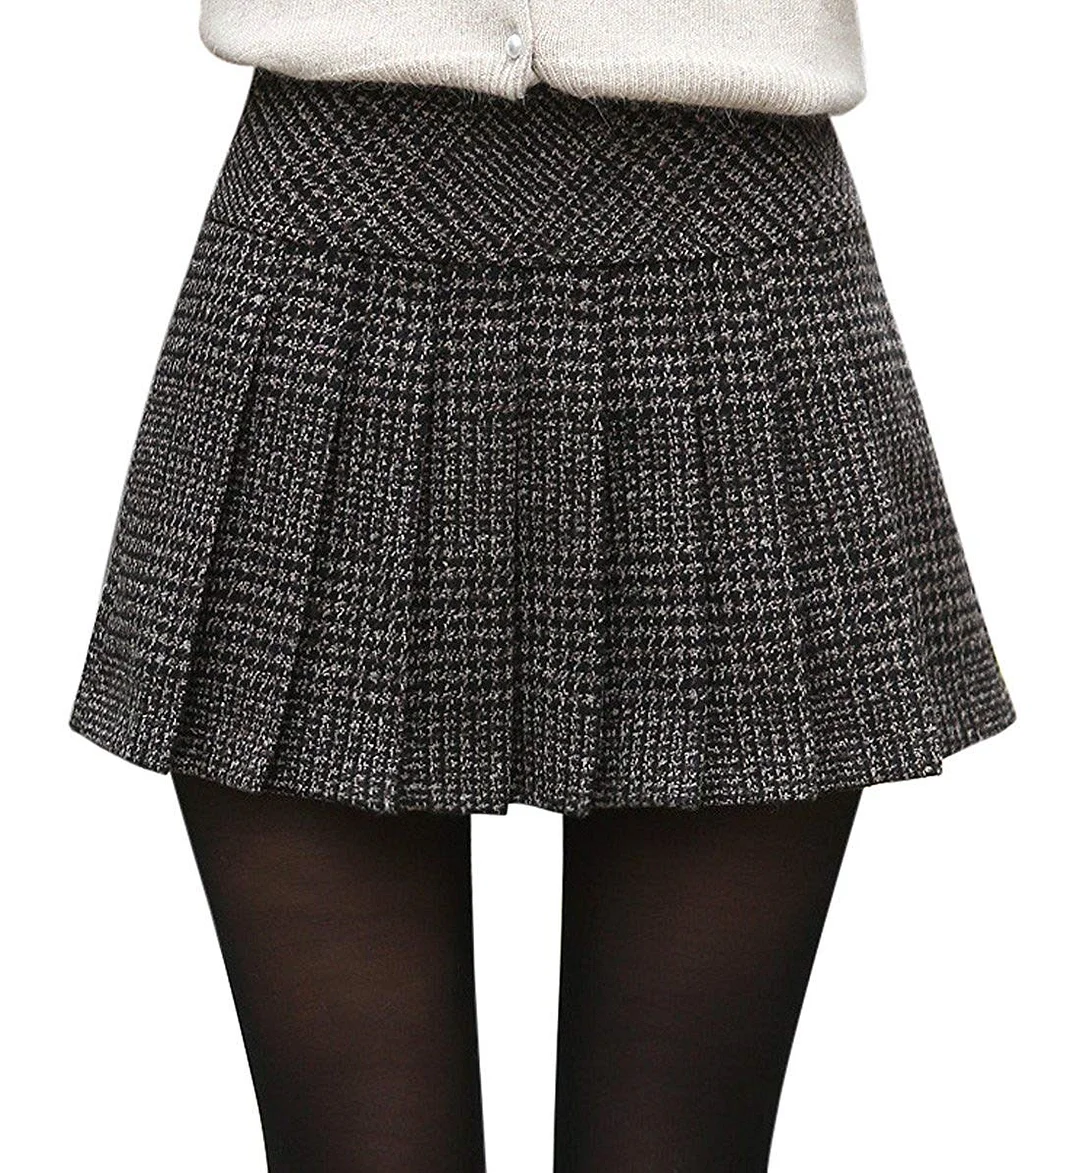 Women's Casual Plaid High Waist A-Line Pleated Skirt